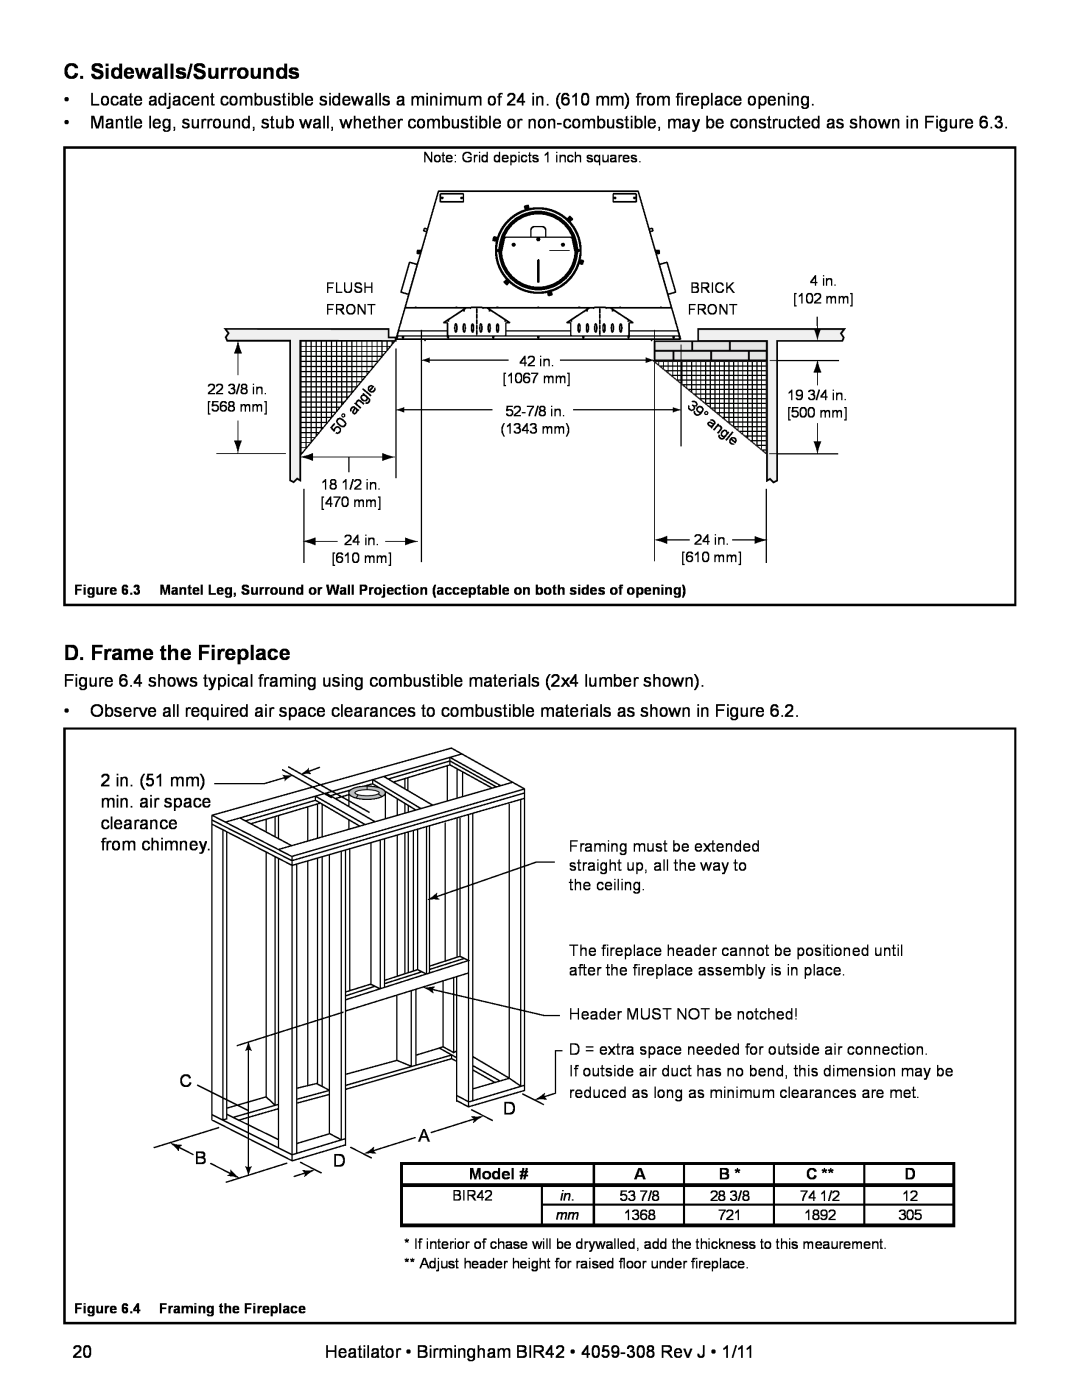 Heatiator BIR42 owner manual C. Sidewalls/Surrounds, D. Frame the Fireplace 